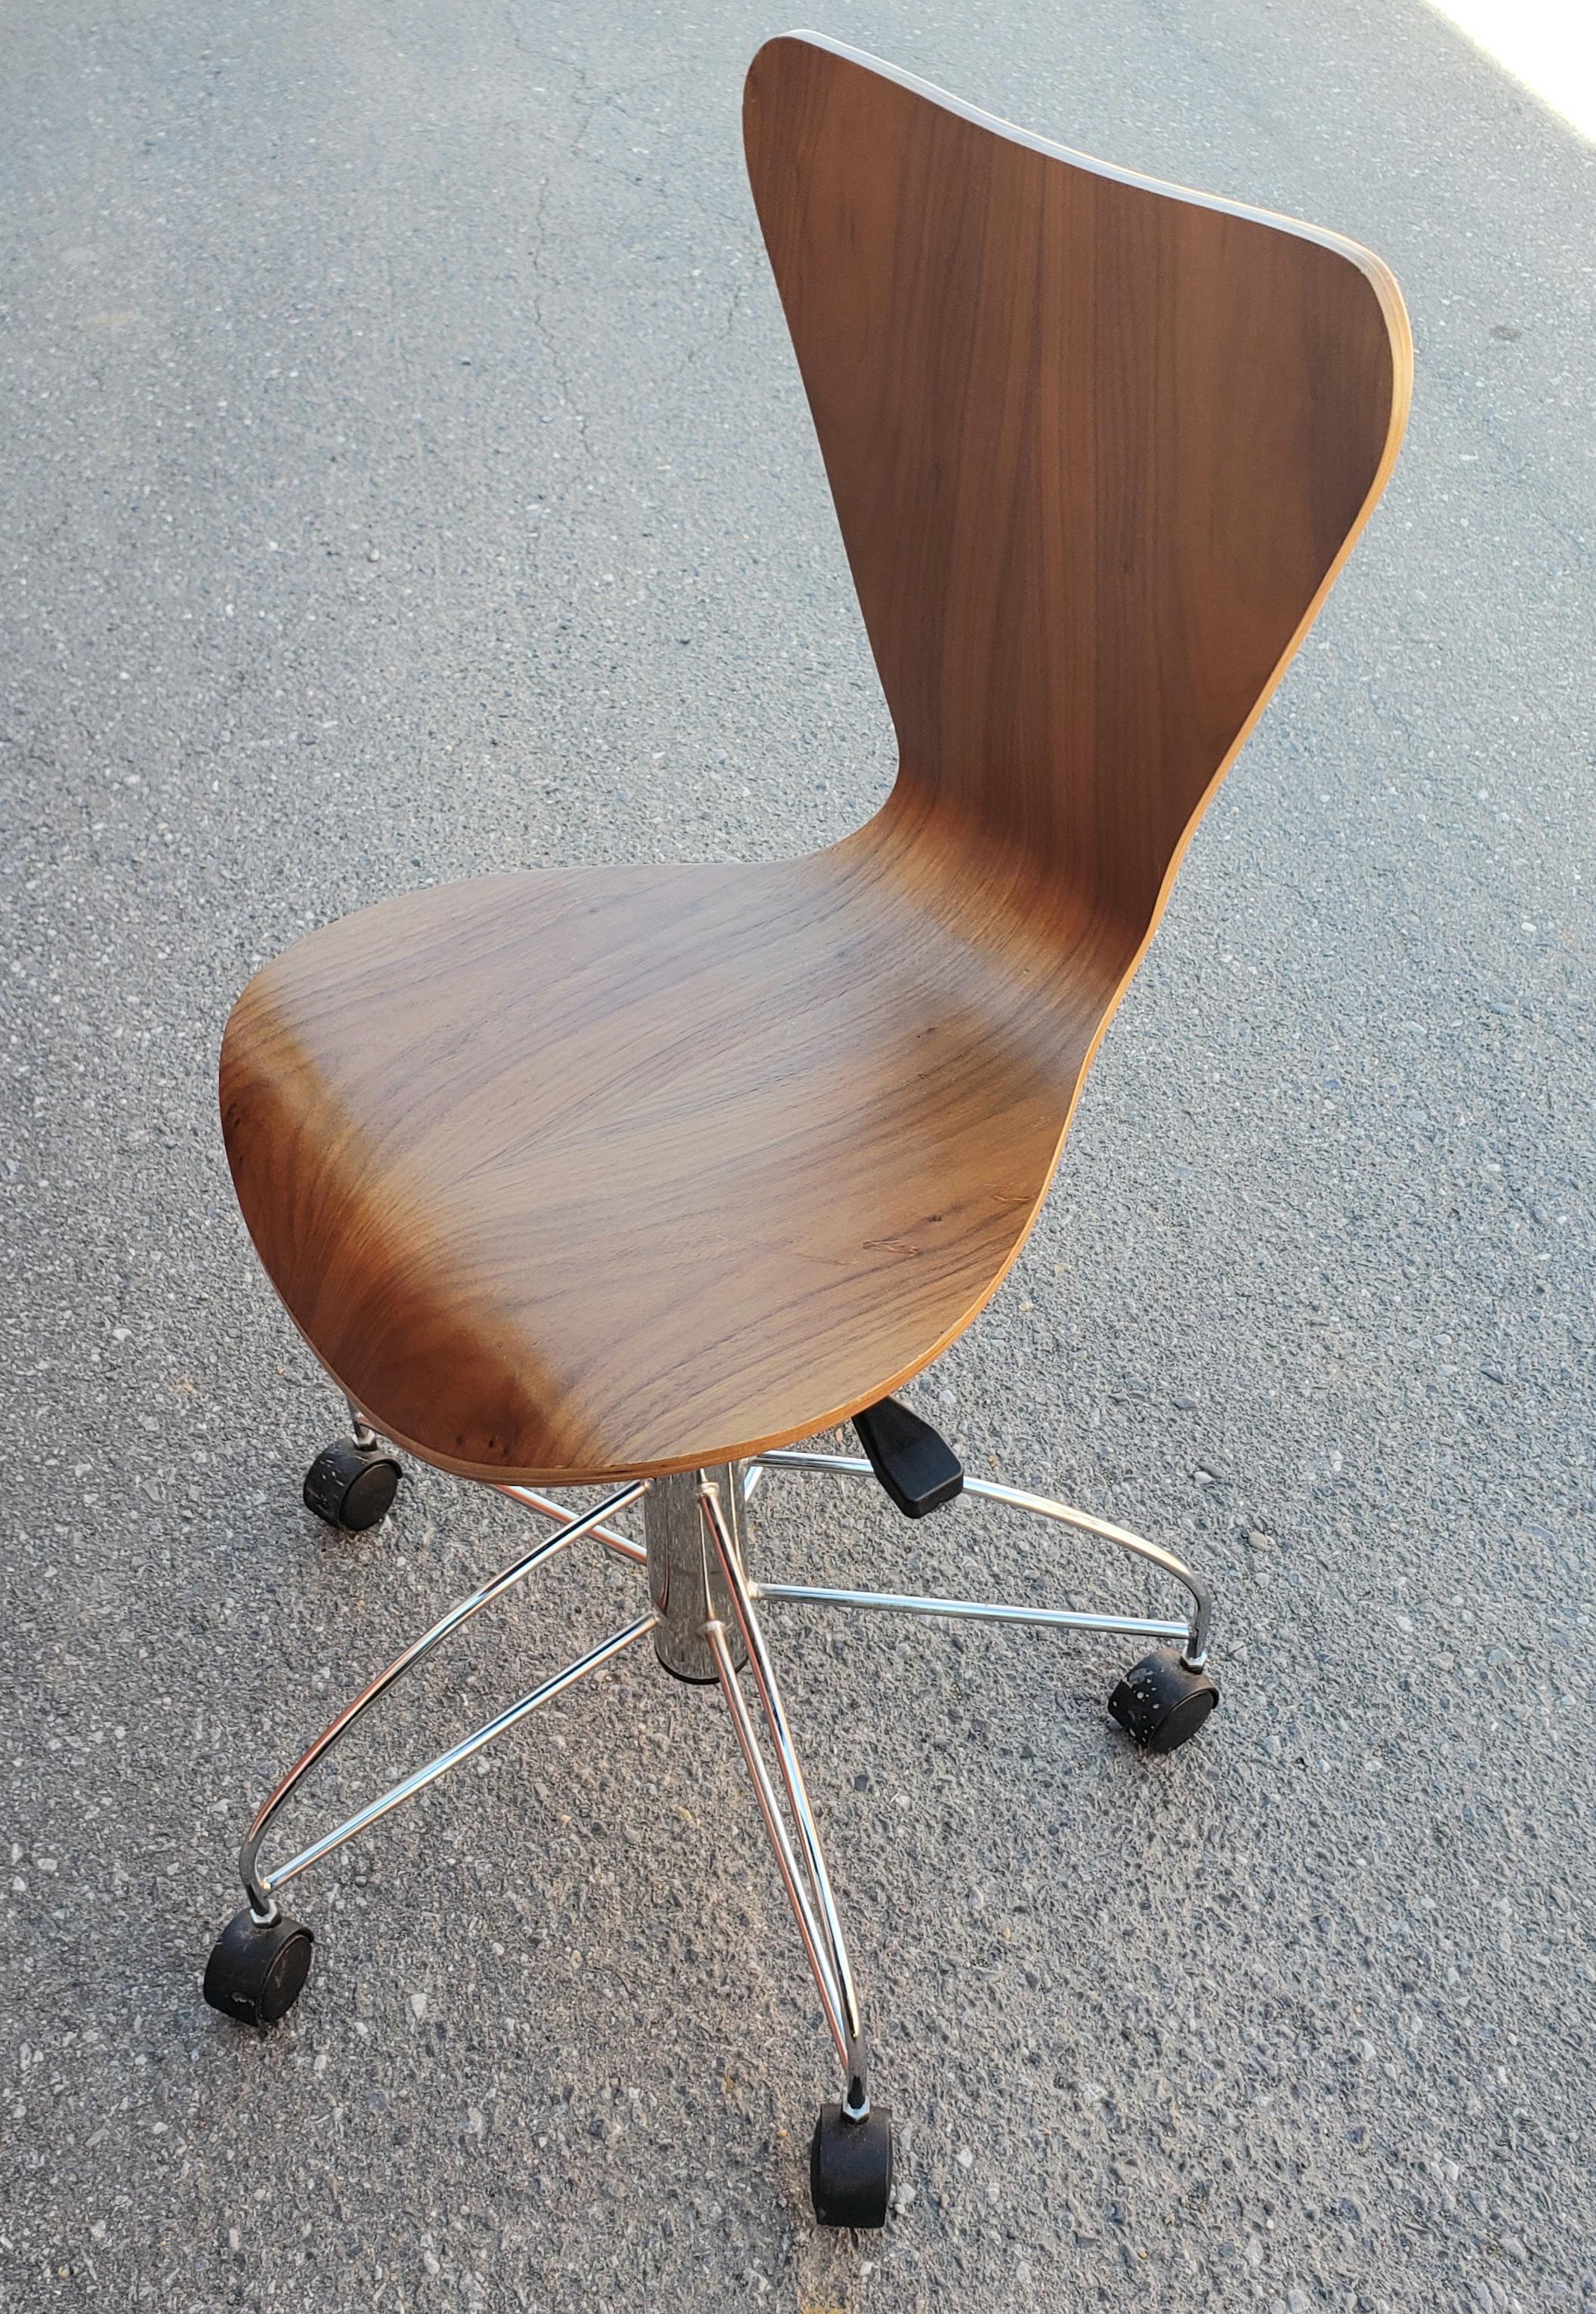 An Arne Jacobsen designed Danish teak adjustable height swivel desk chair. Seat height is adjustable from 17